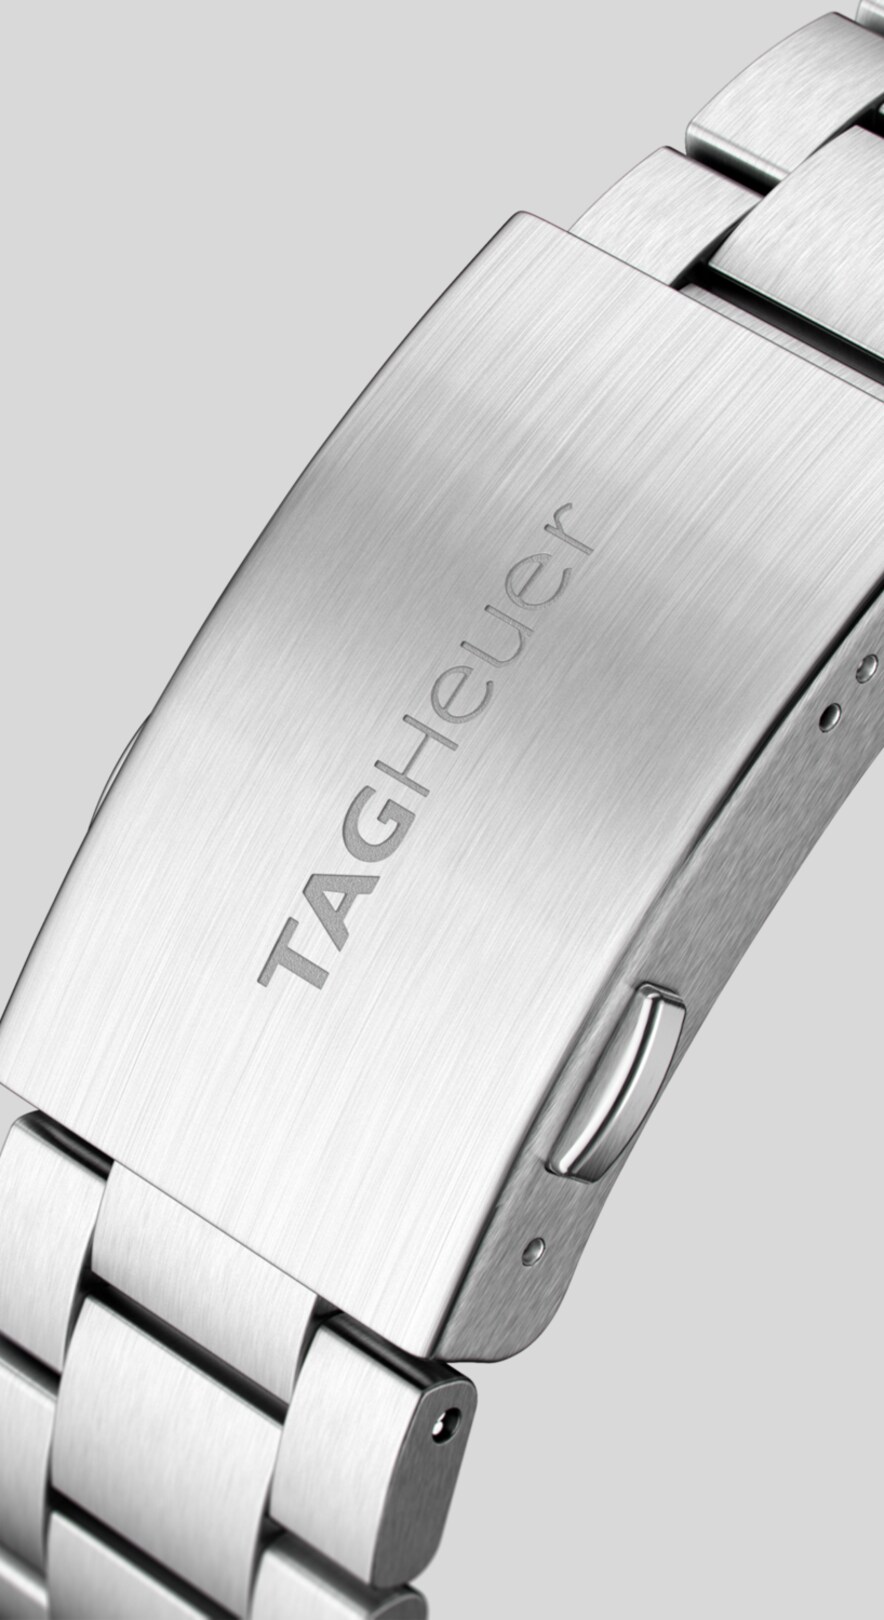 Tag Heuer Men's WAZ1118.BA0875 Formula 1 Stainless Steel Watch